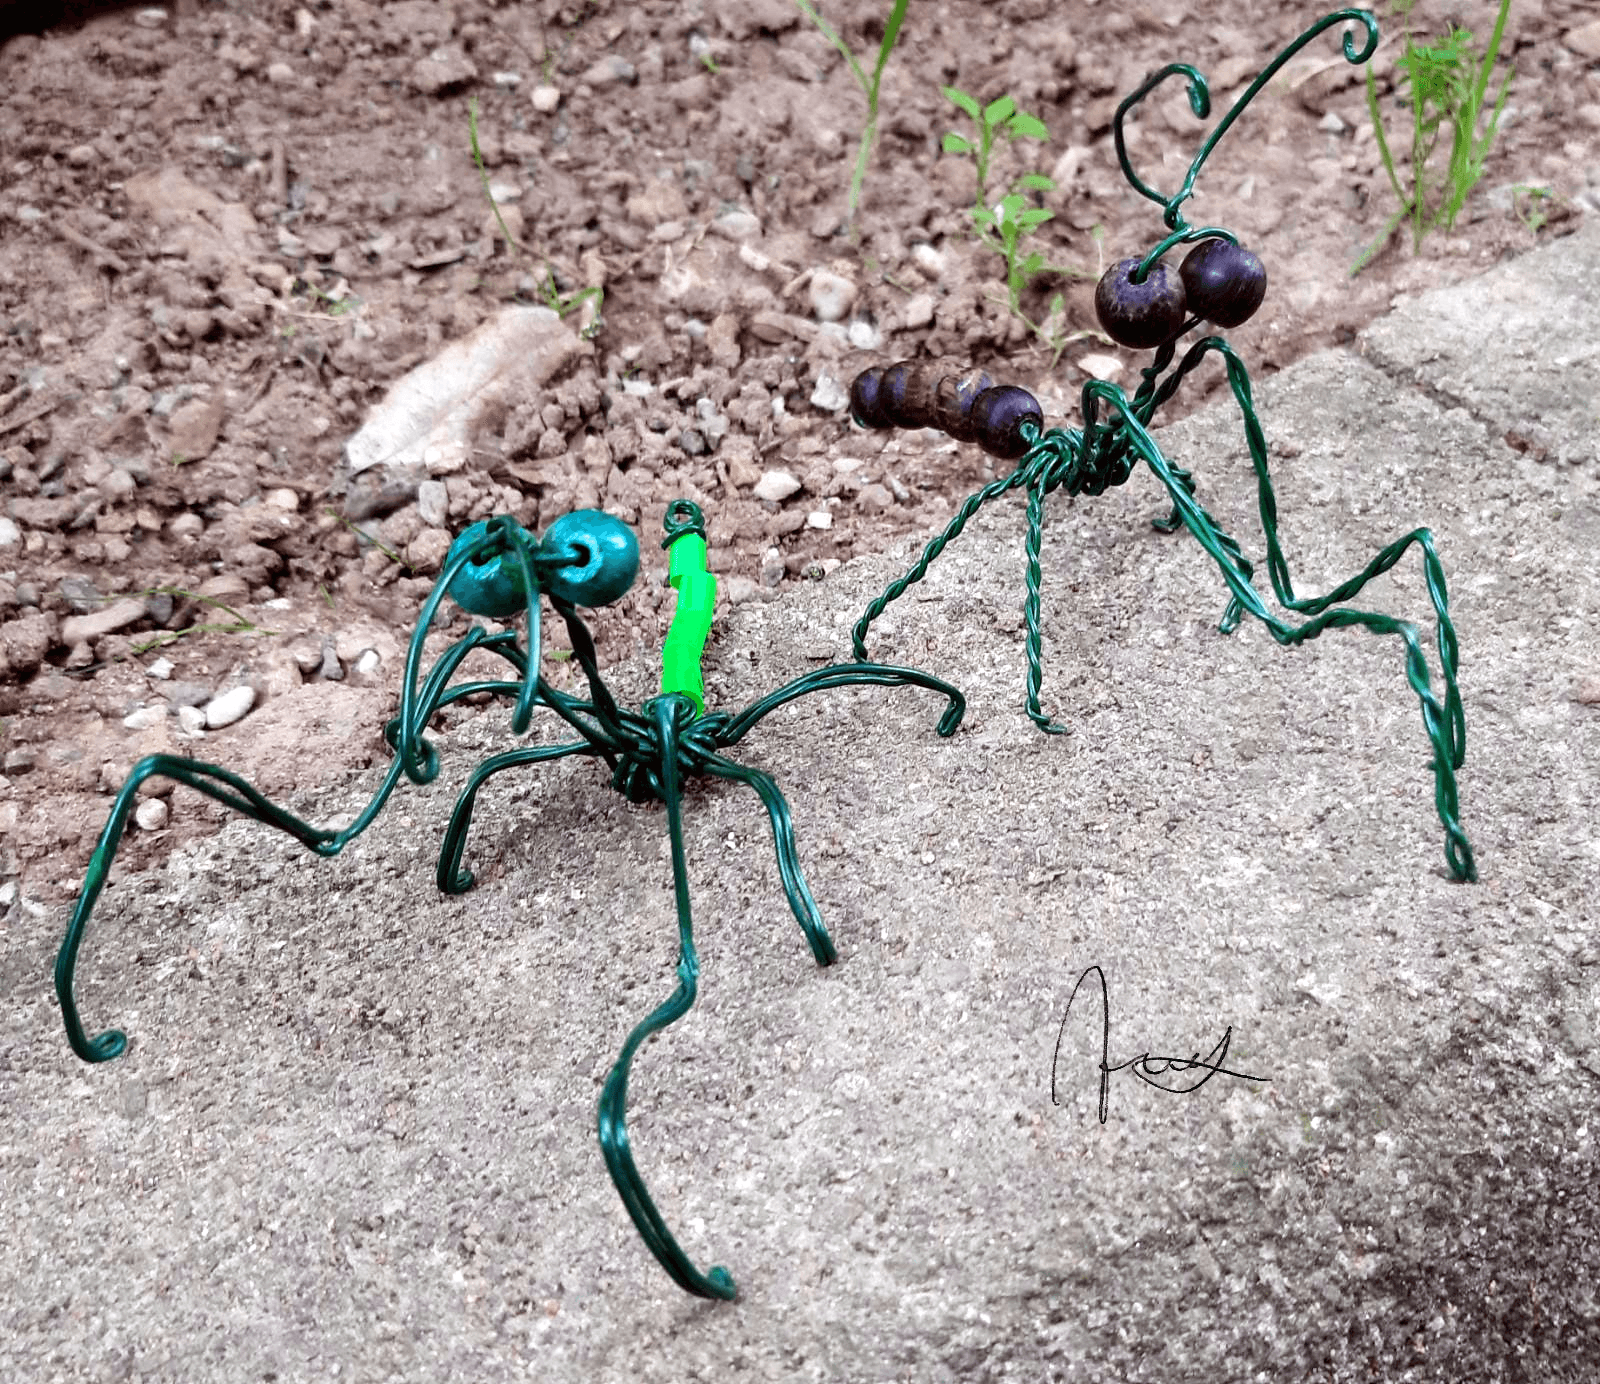 Ant-mantis #6